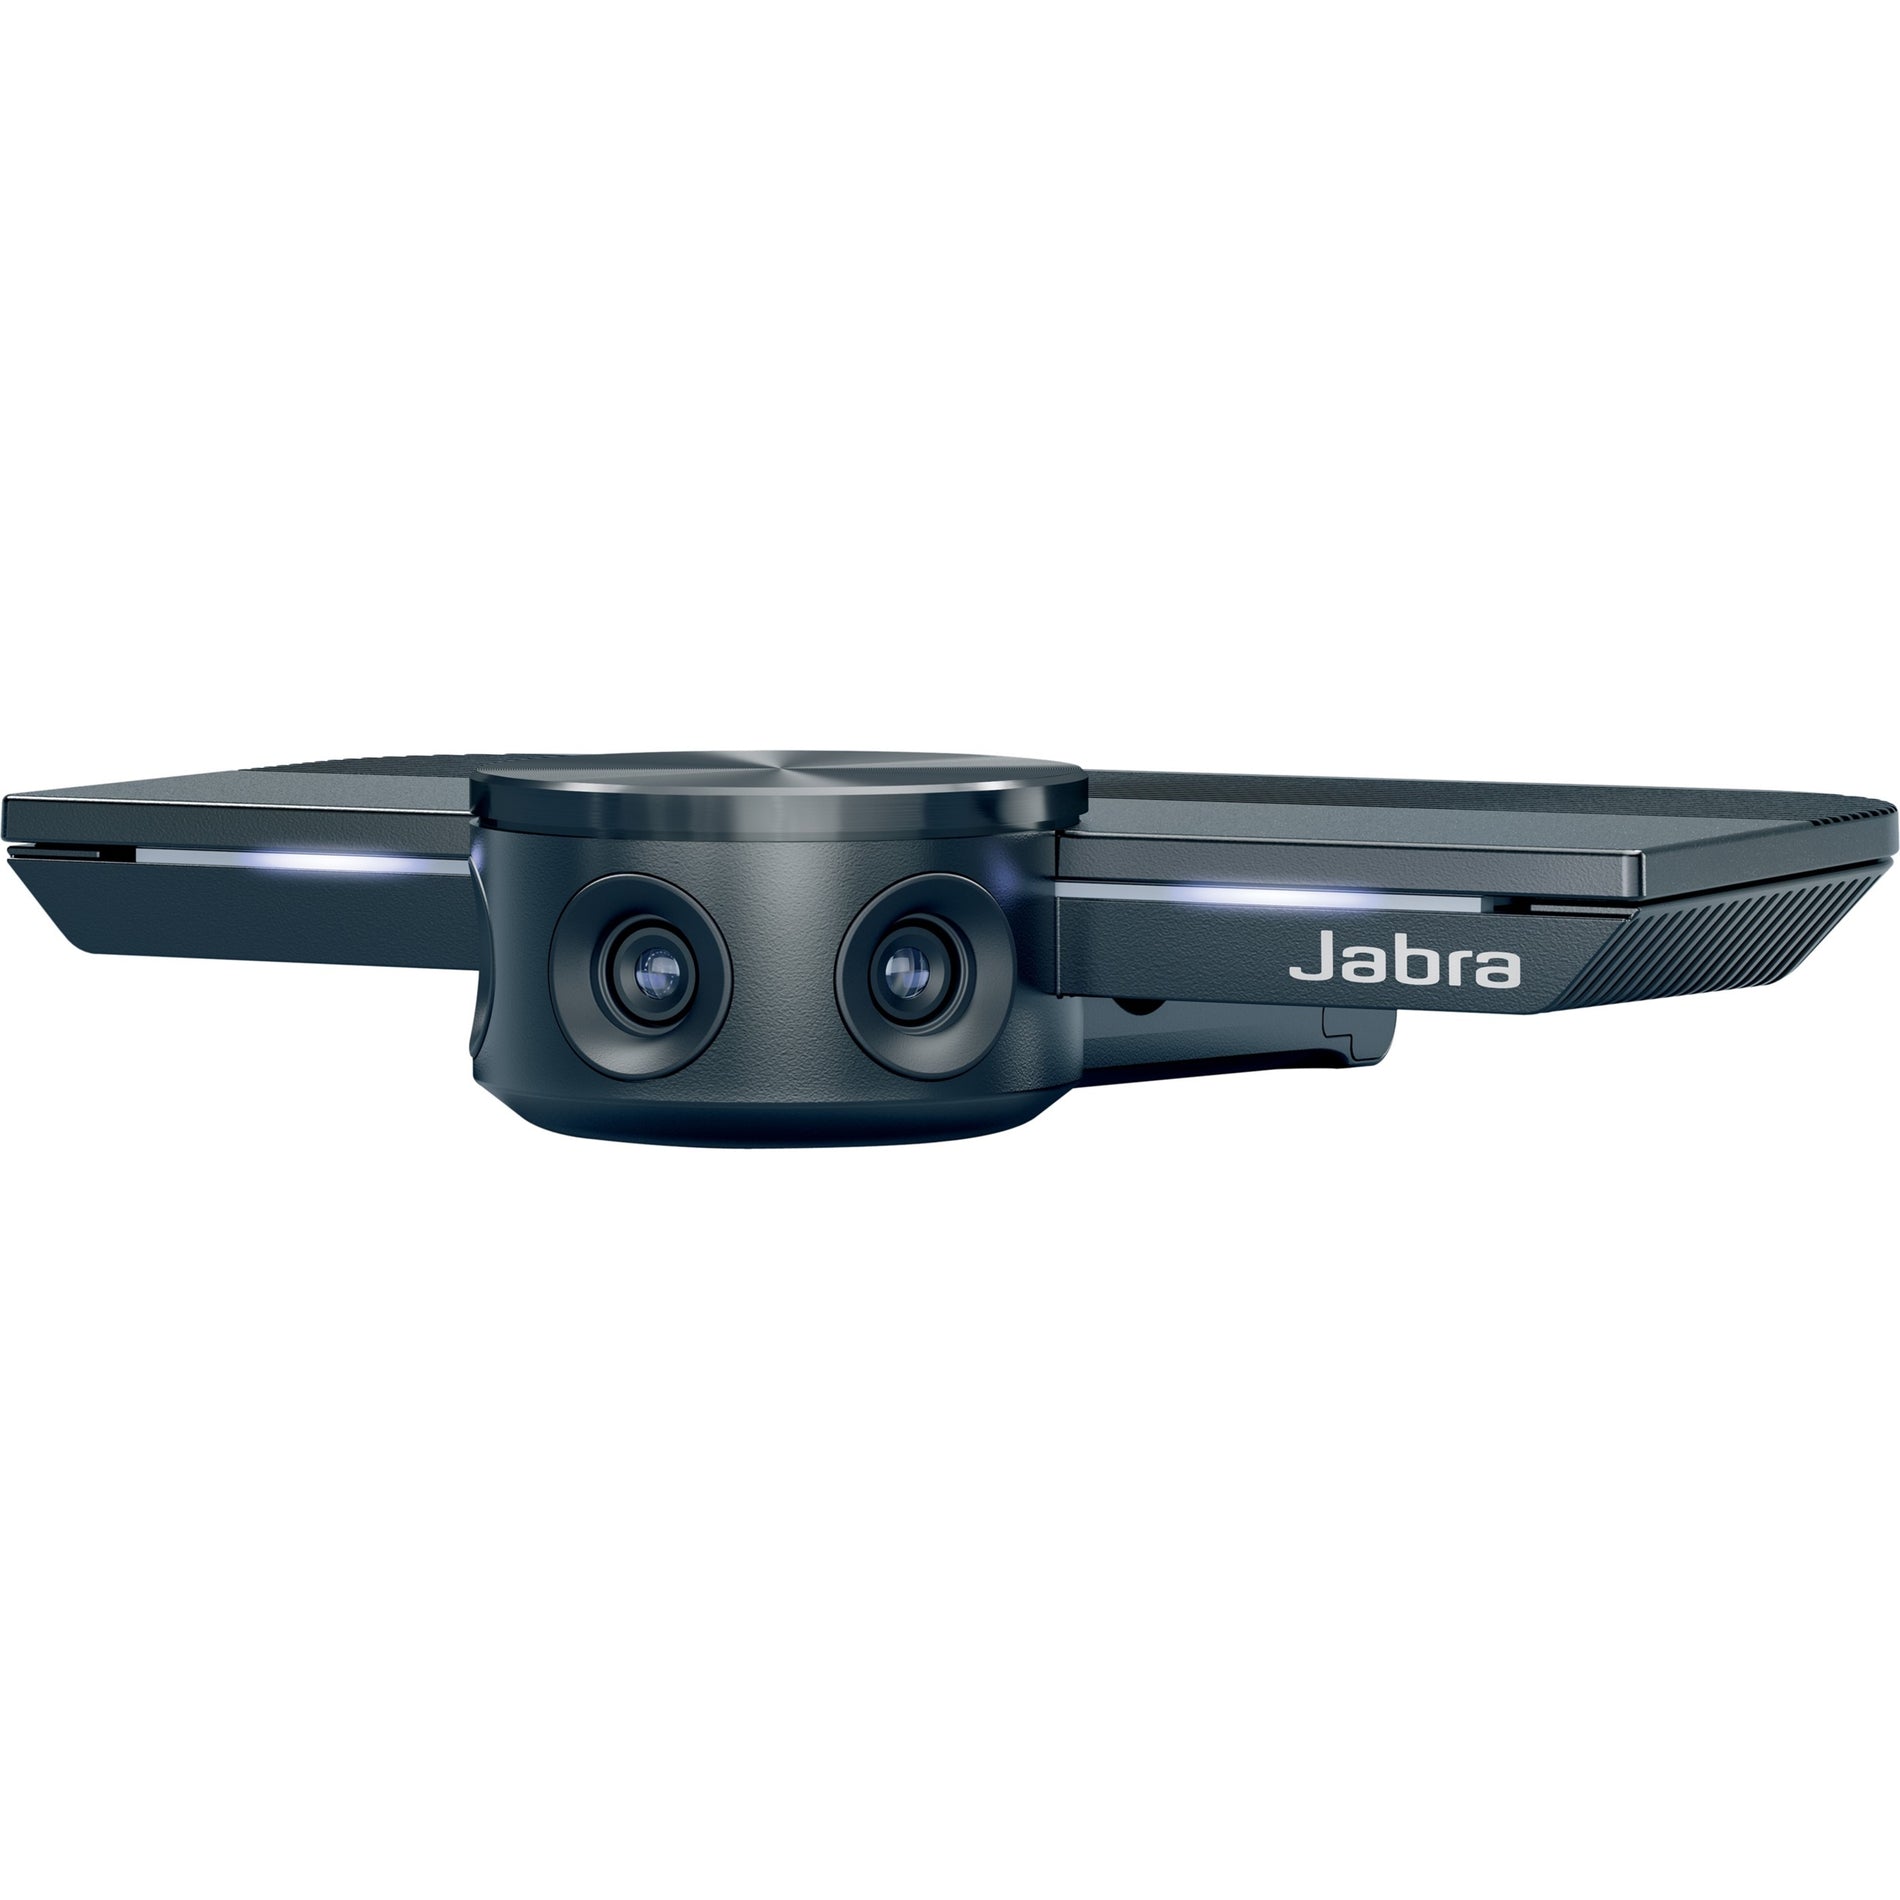 Jabra PanaCast Video Conferencing Camera - 13 Megapixel - USB (8100-119) Left image